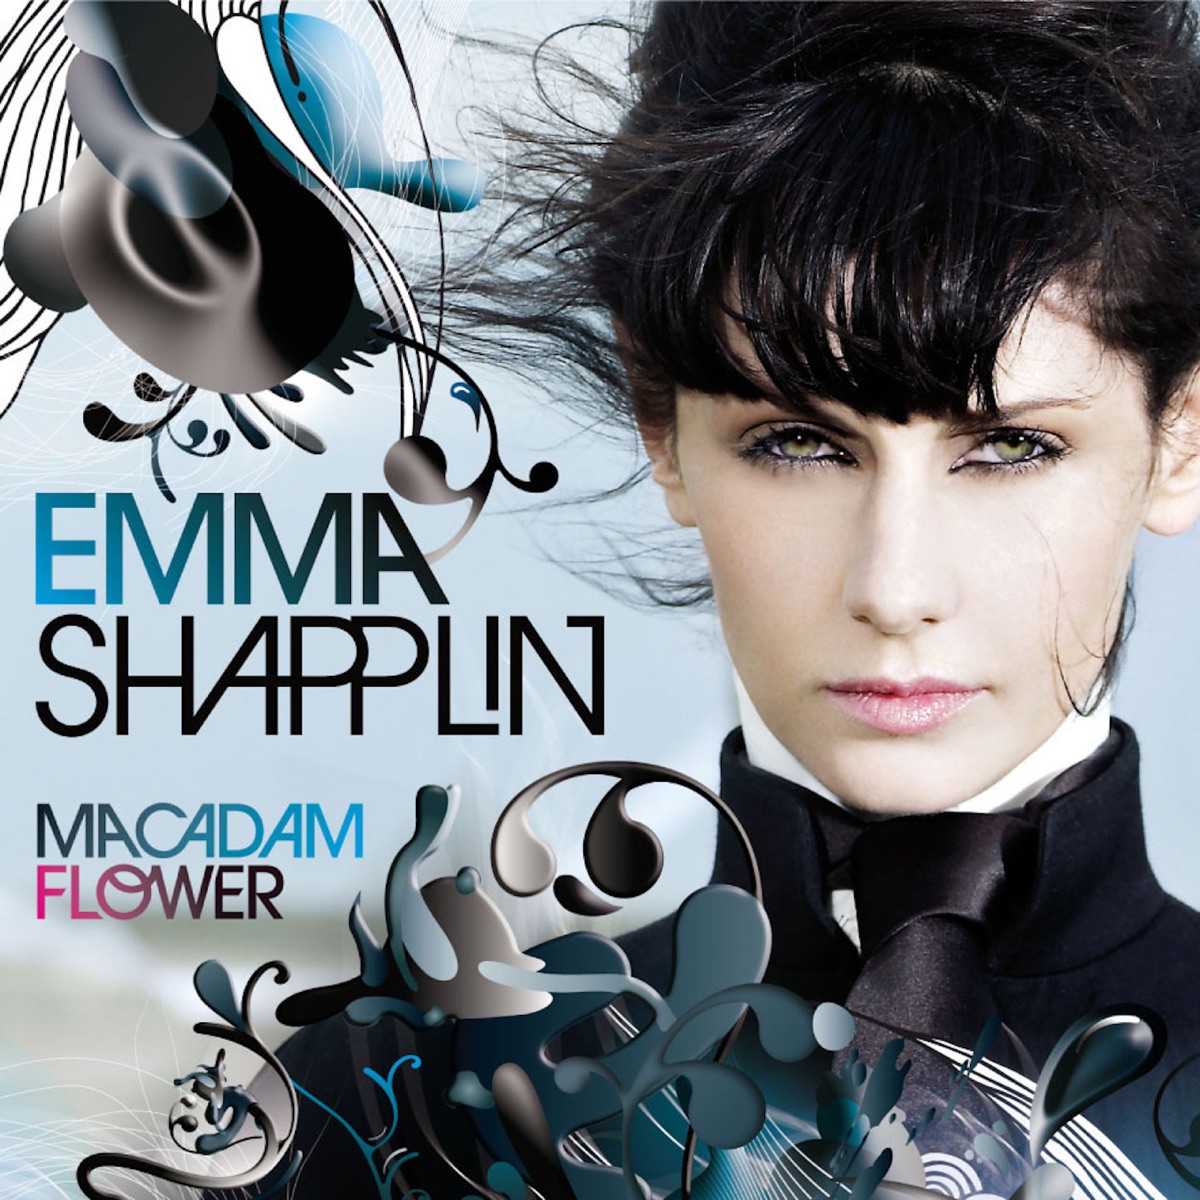 Etterna - Album by Emma Shapplin - Apple Music